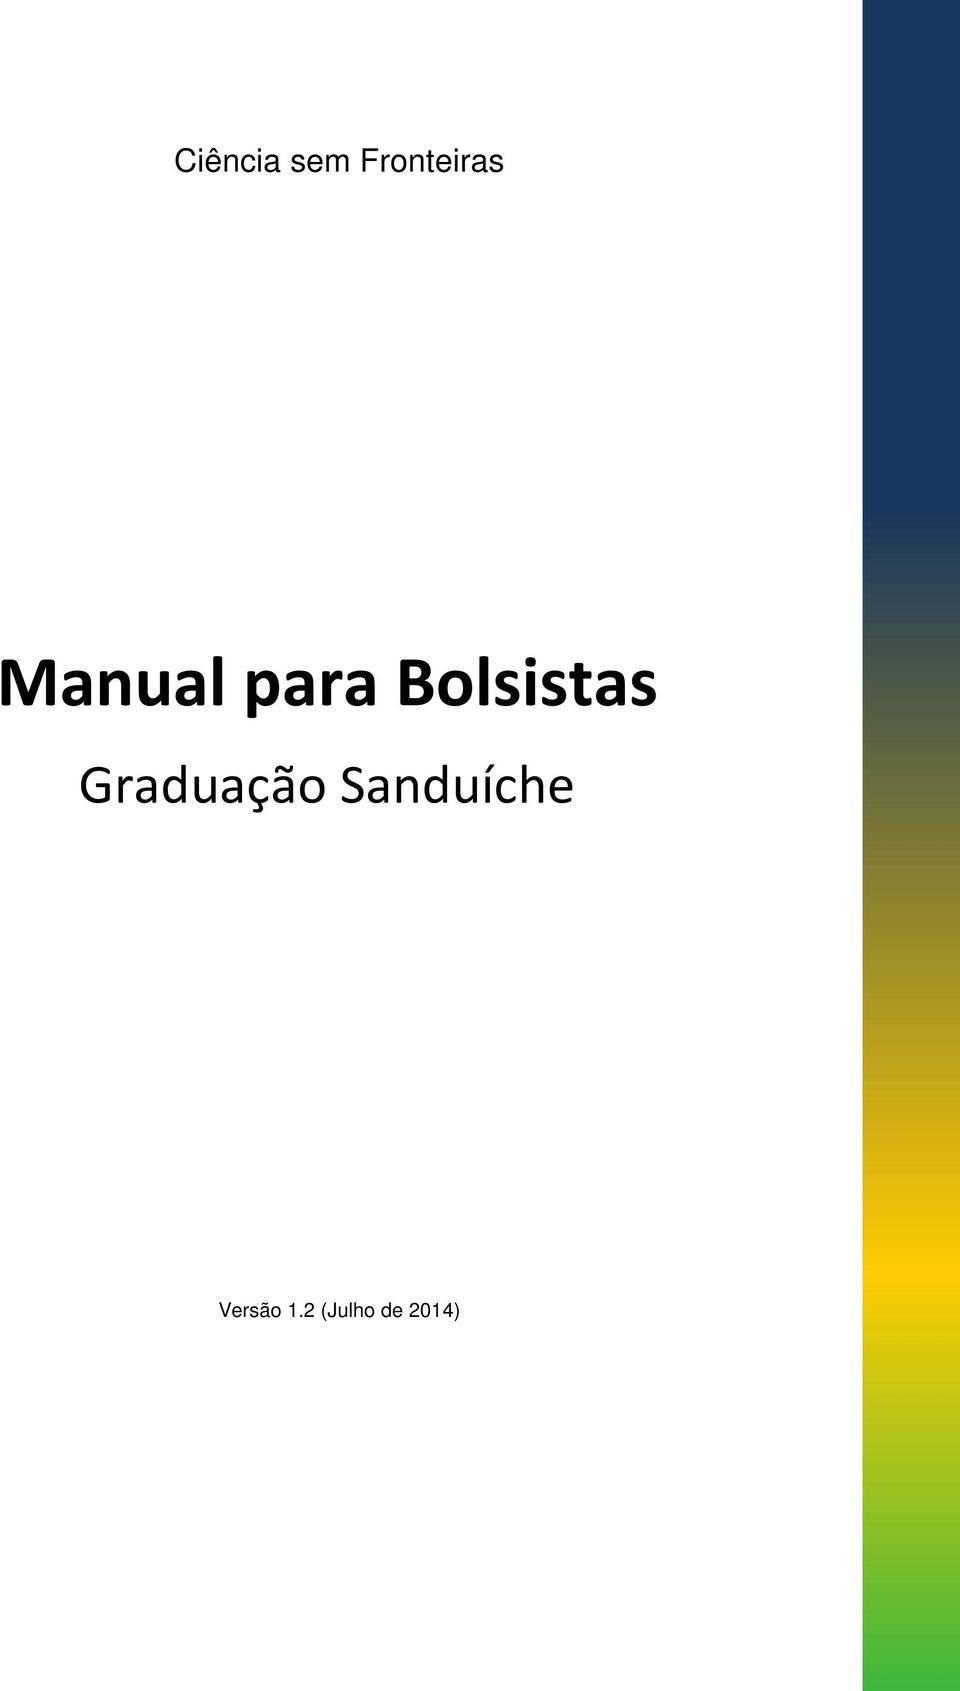 Graduação Sanduíche